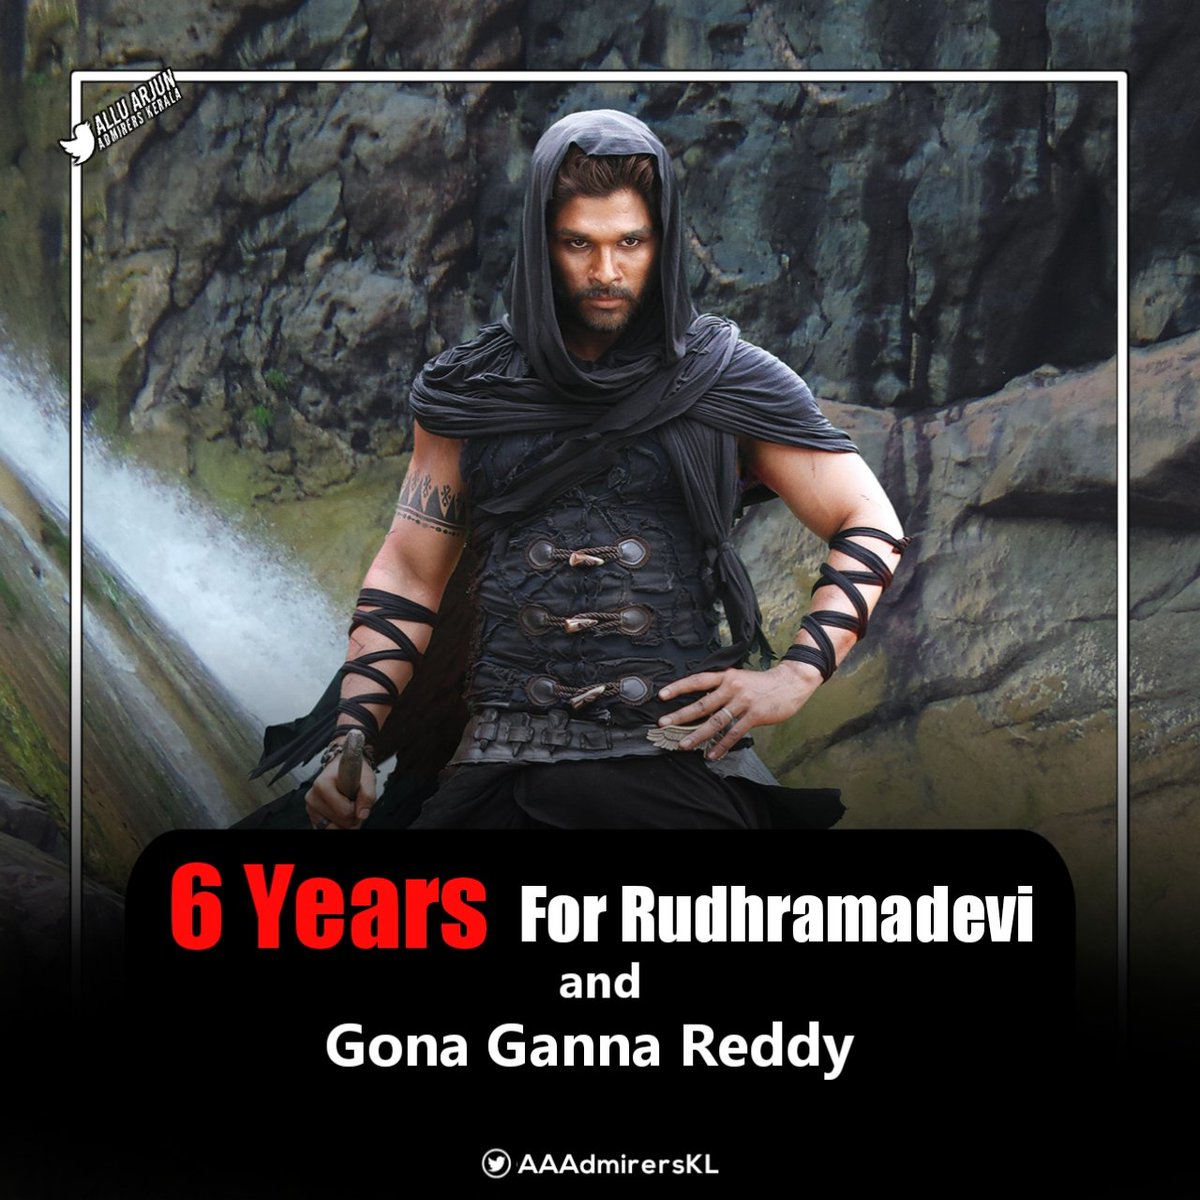 6 Years for ionic #GonaGannaReddy and #Rudhramadevi

 #6YearsforRudhramadevi